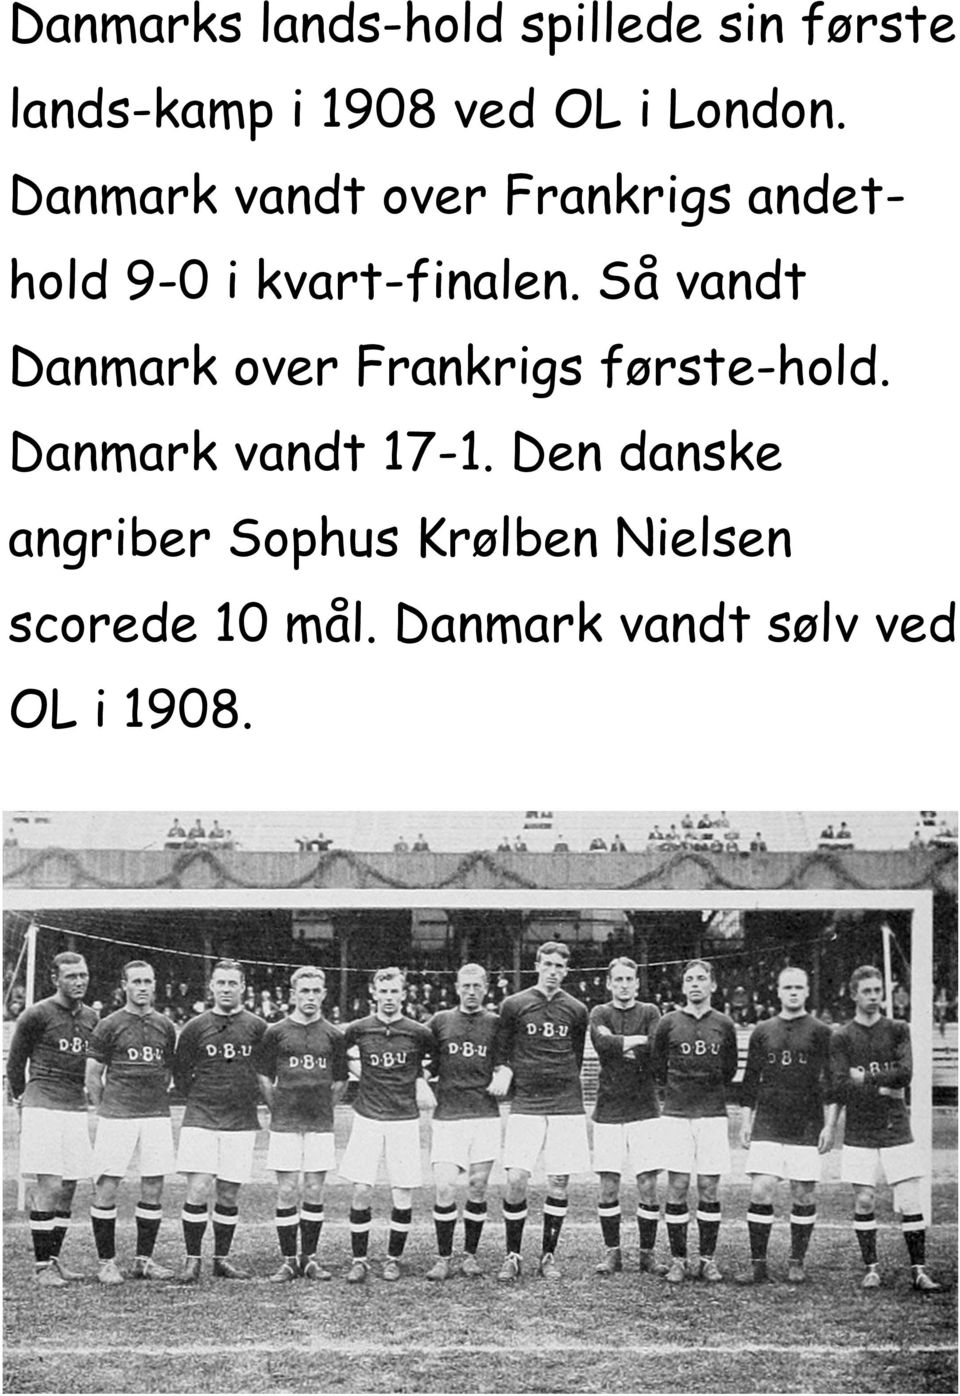 Så vandt Danmark over Frankrigs første-hold. Danmark vandt 17-1.